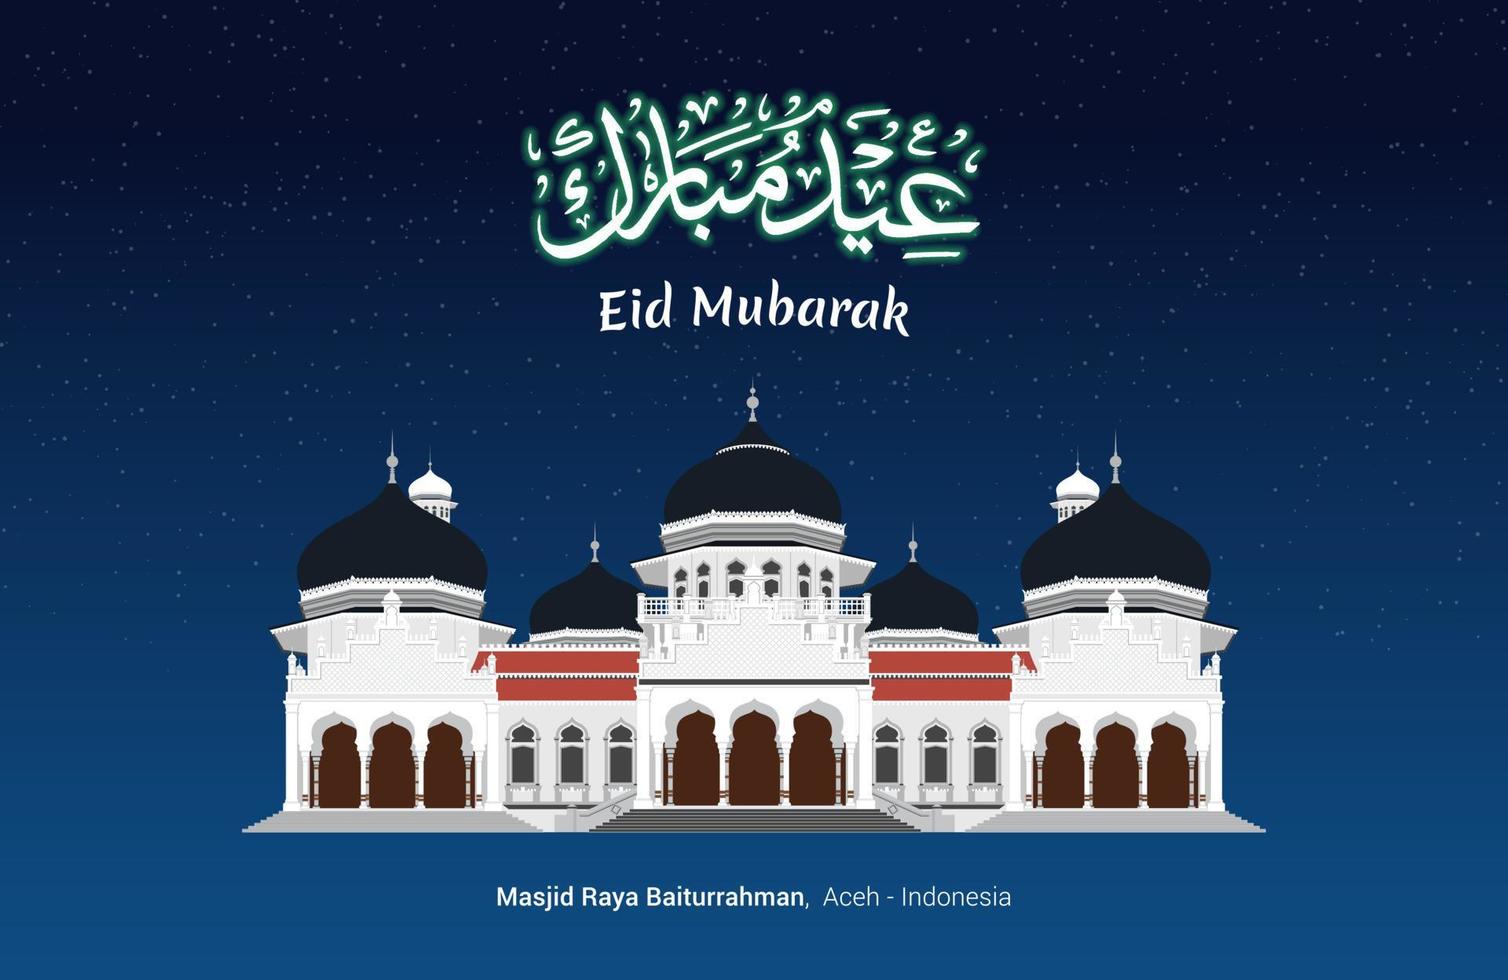 masjid raya baiturrahman aceh - Indonesië met eid mubarak arabische kalligrafie, selamat hari raya lebaran baiturrahman grote moskee. vector